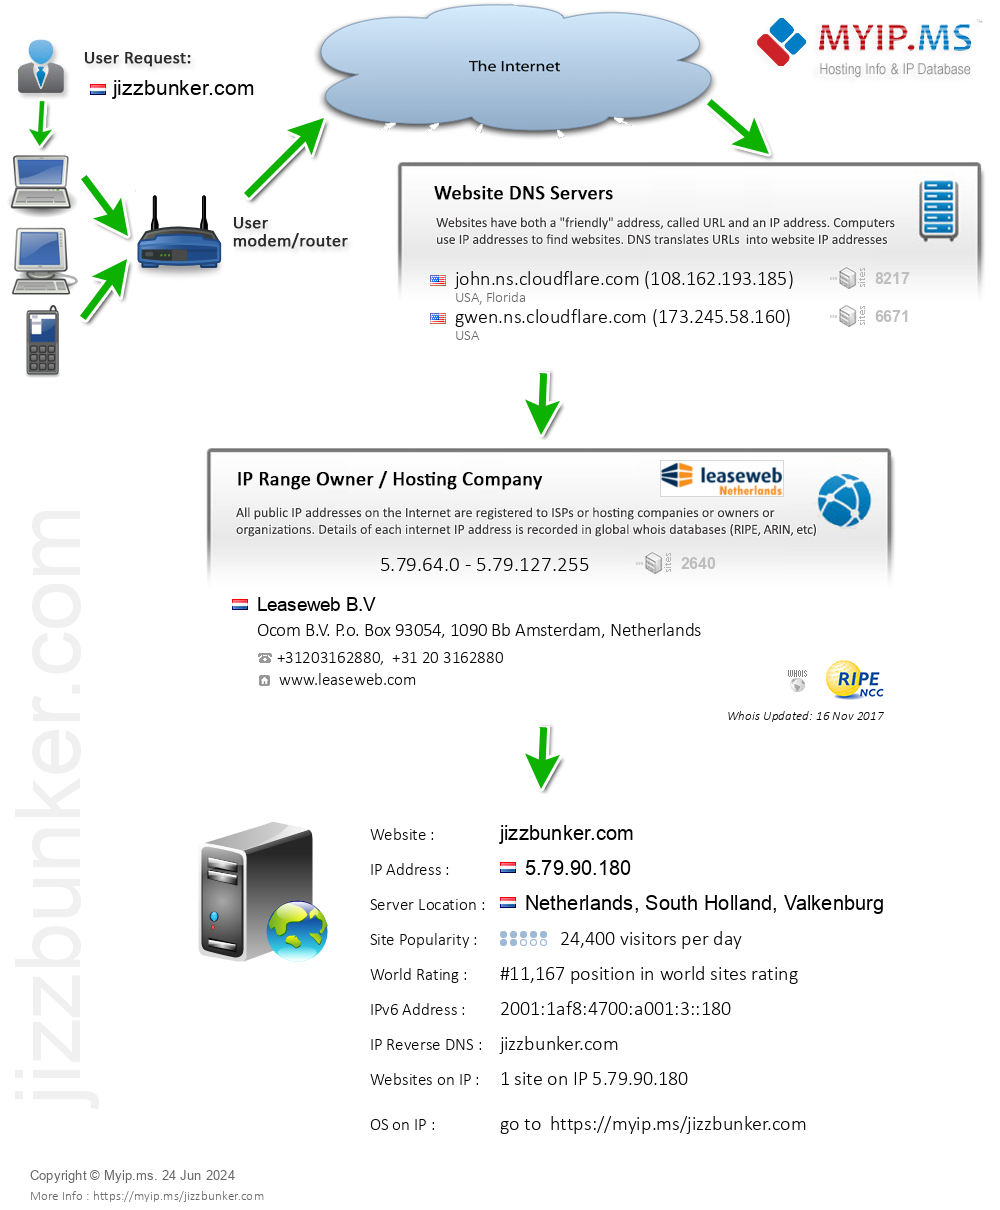 Jizzbunker.com - Website Hosting Visual IP Diagram